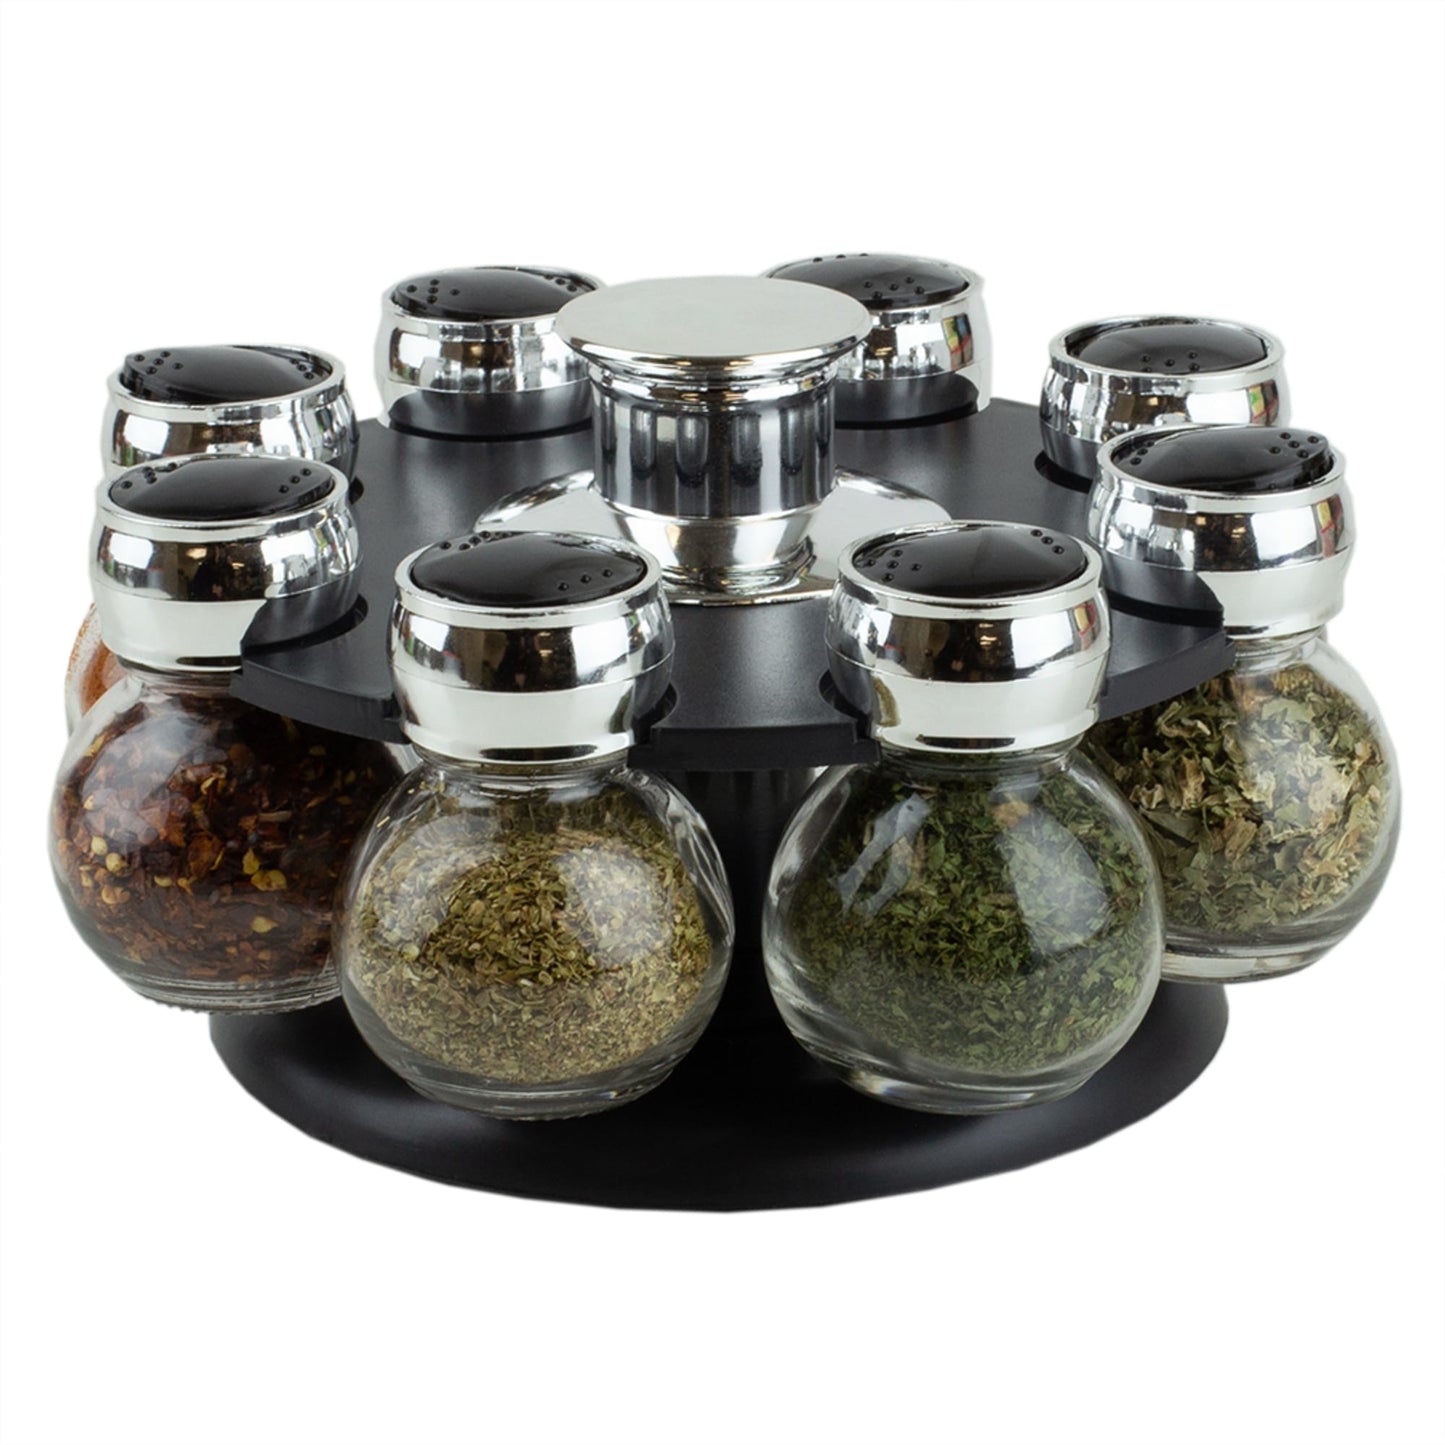 8 Jars Spice Rack set